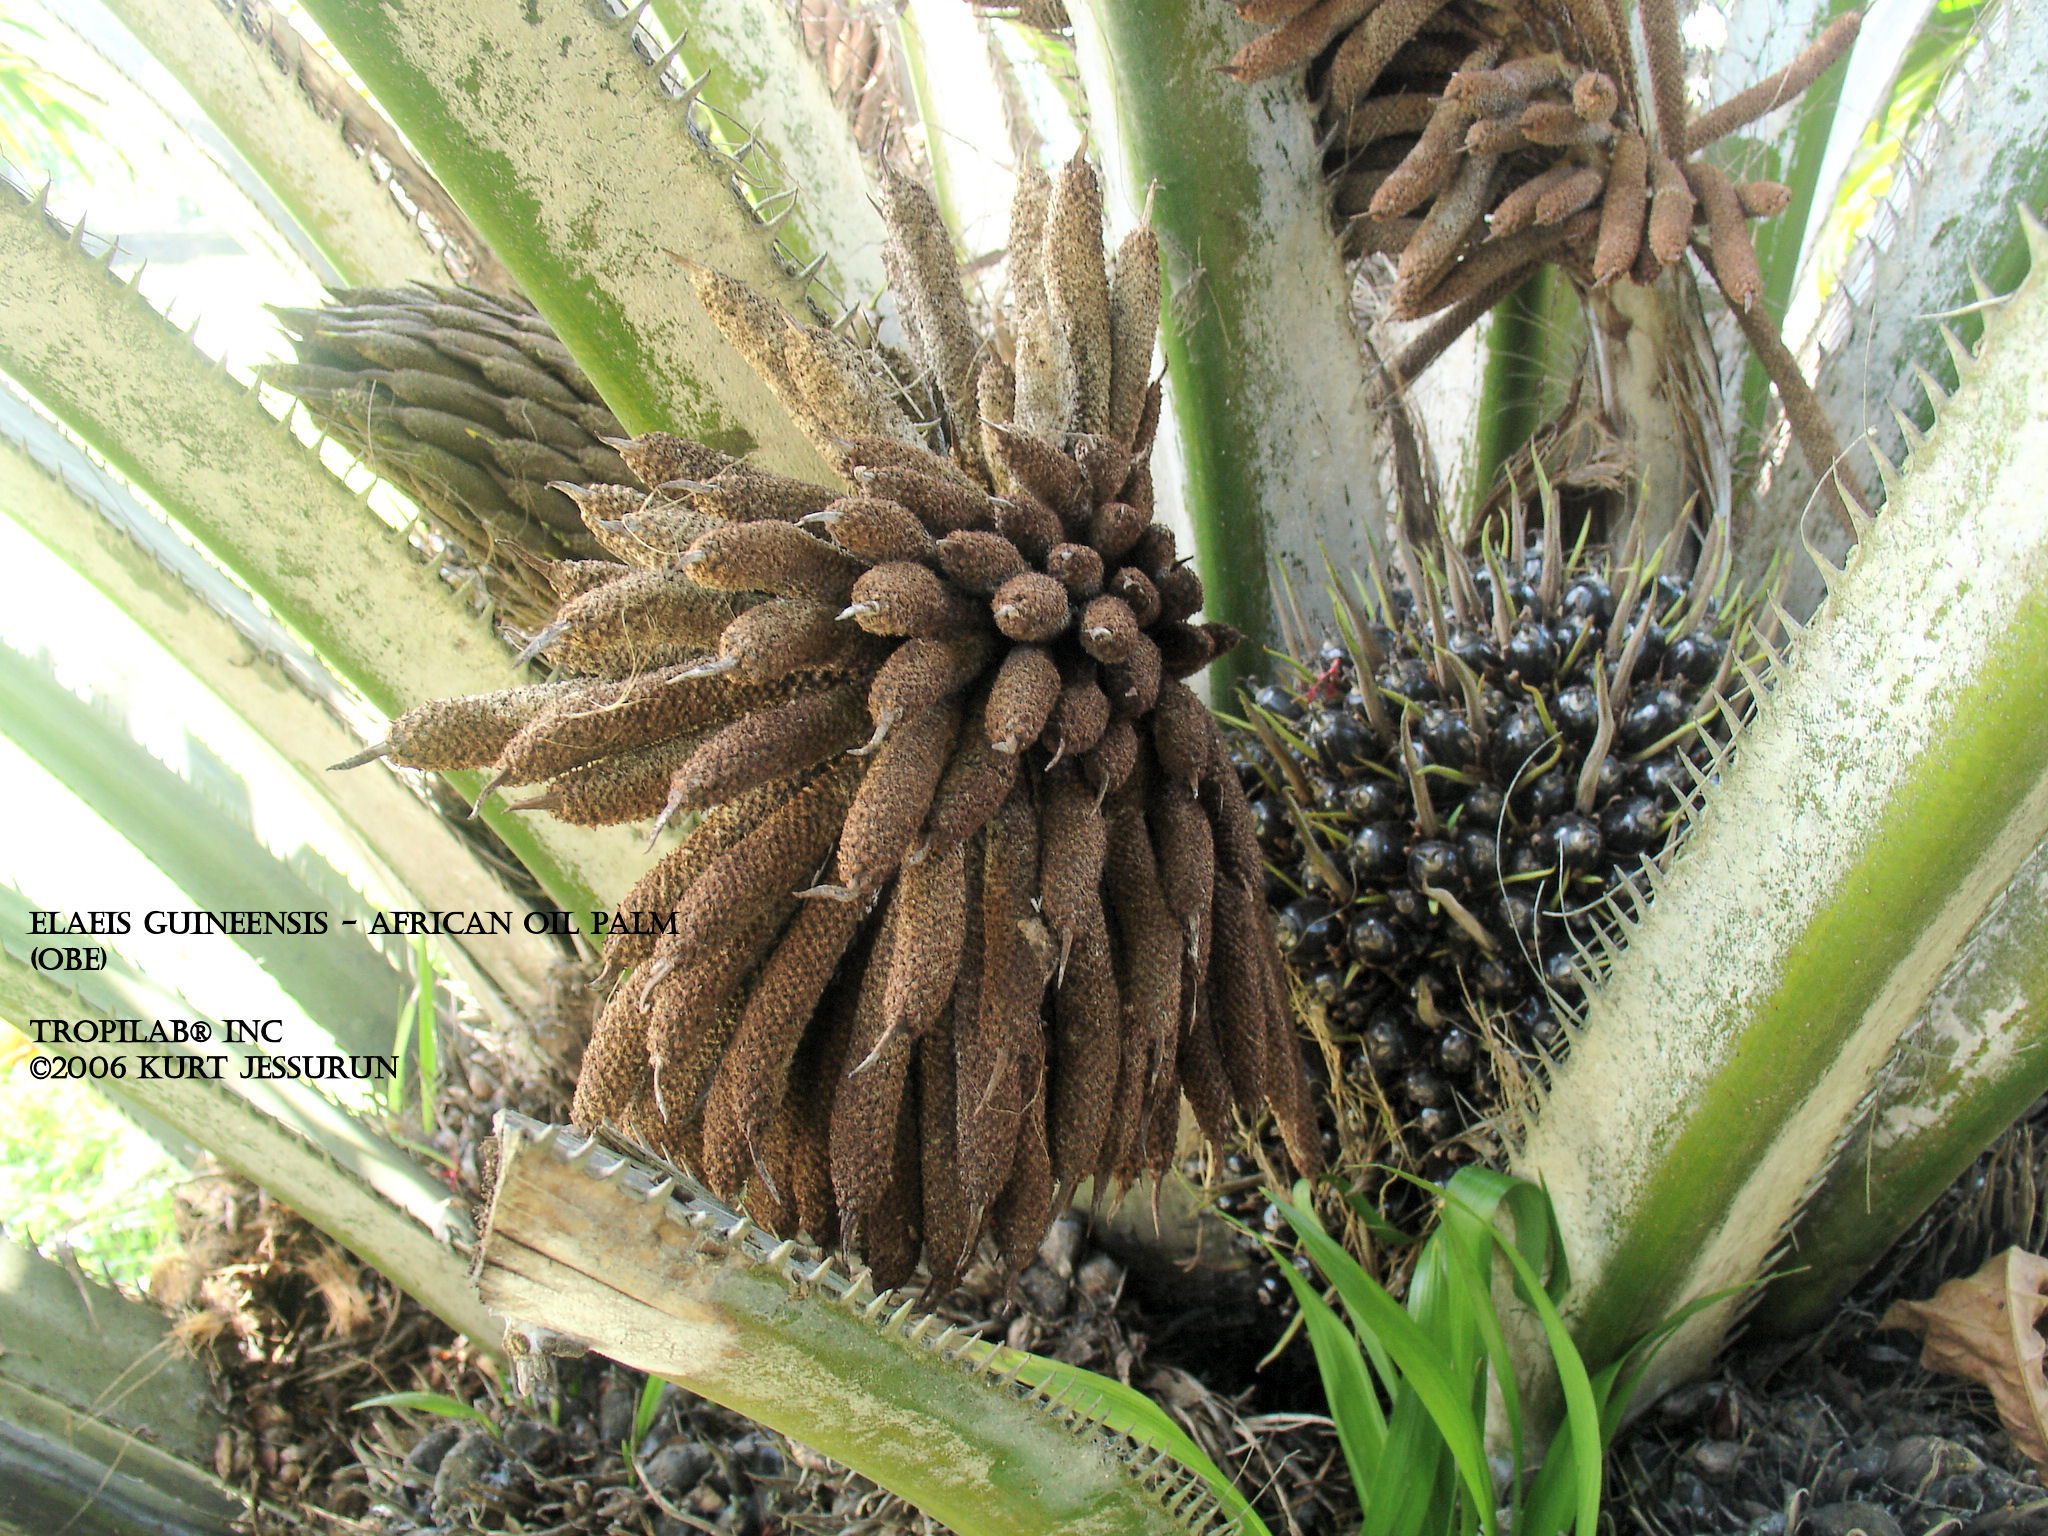 Elaeis guineensis - Obe palm fruits